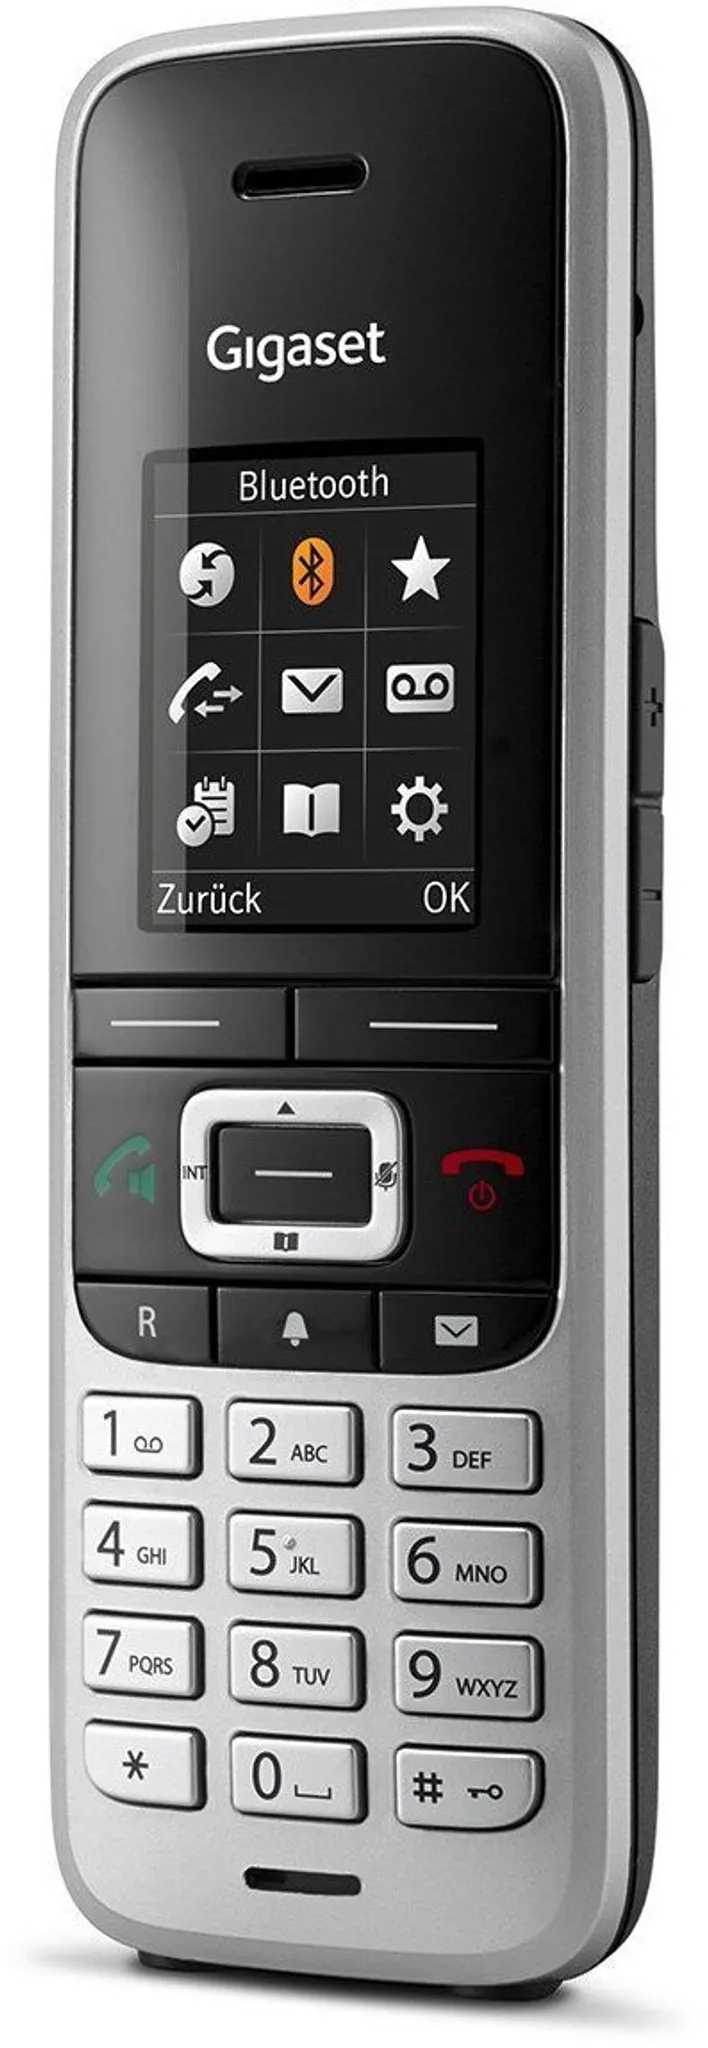 Graphit Plug-Type C EU Alcatel Gigaset SL750H PRO DECT telephone handset Schwarz 